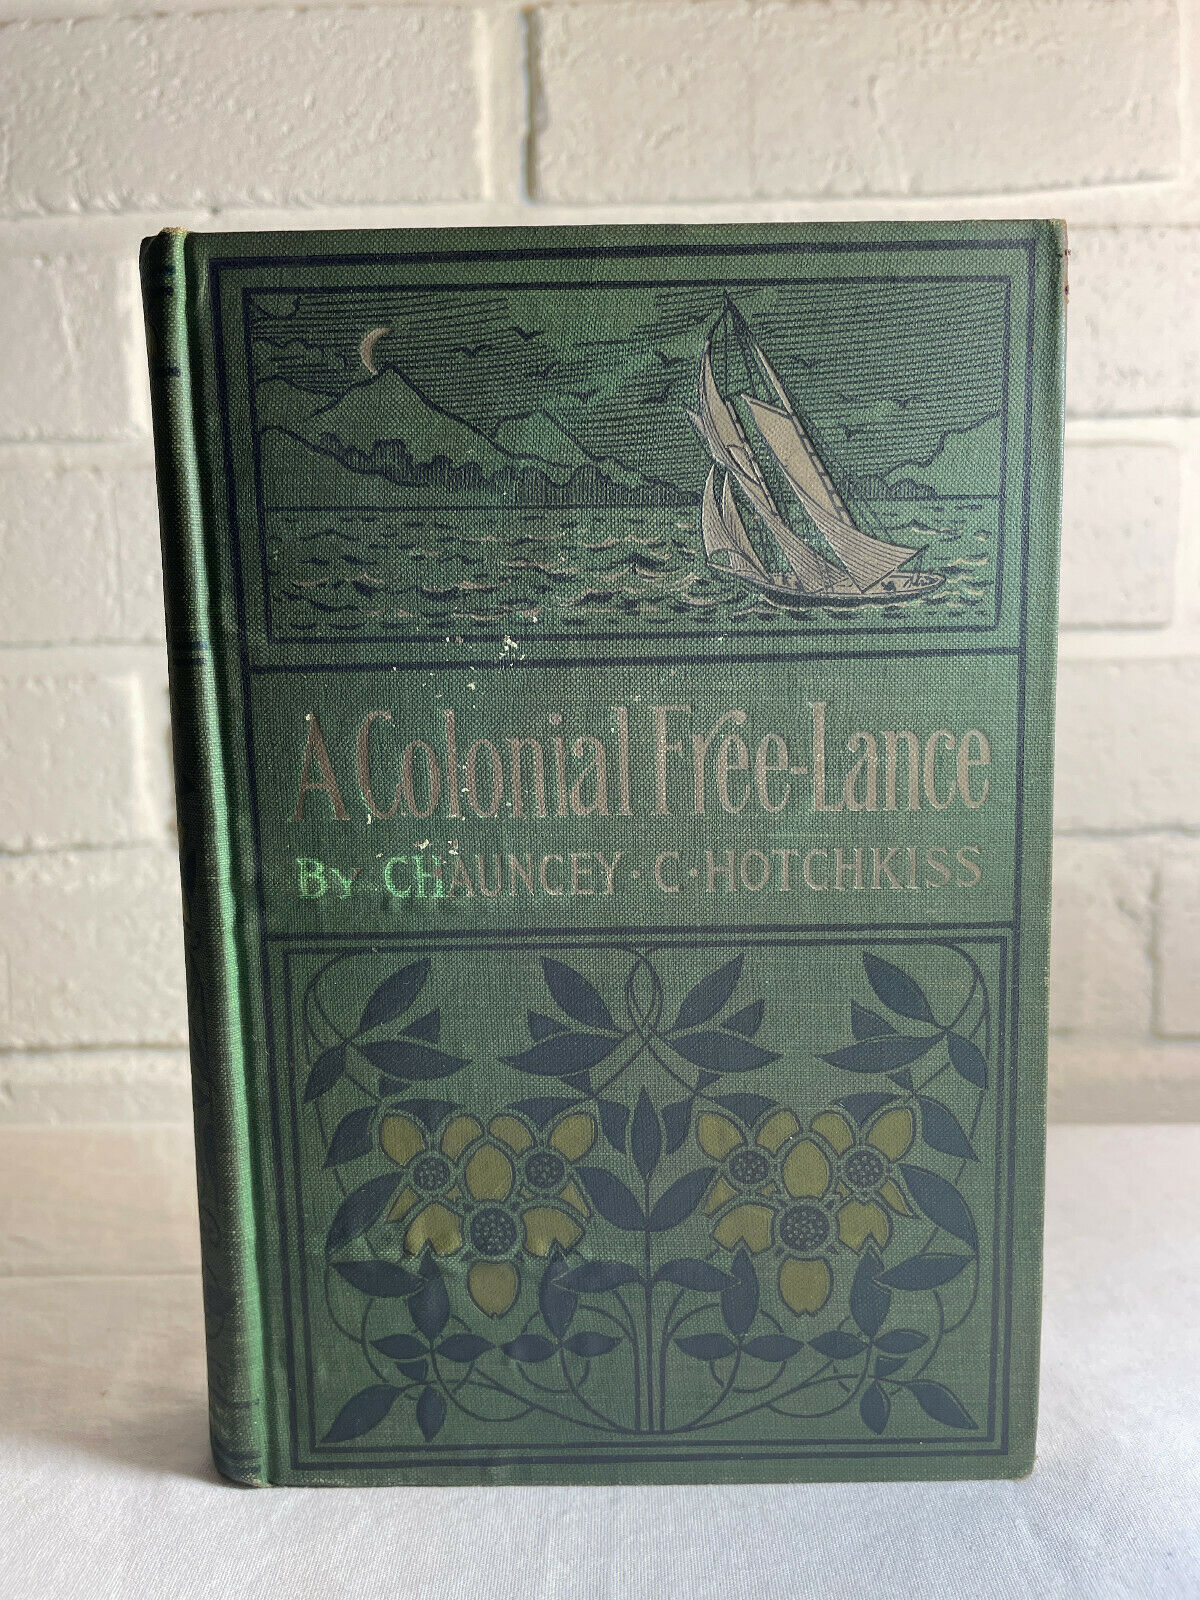 A Colonial Free-Lance by Chauncey C. Hotchkiss 1897